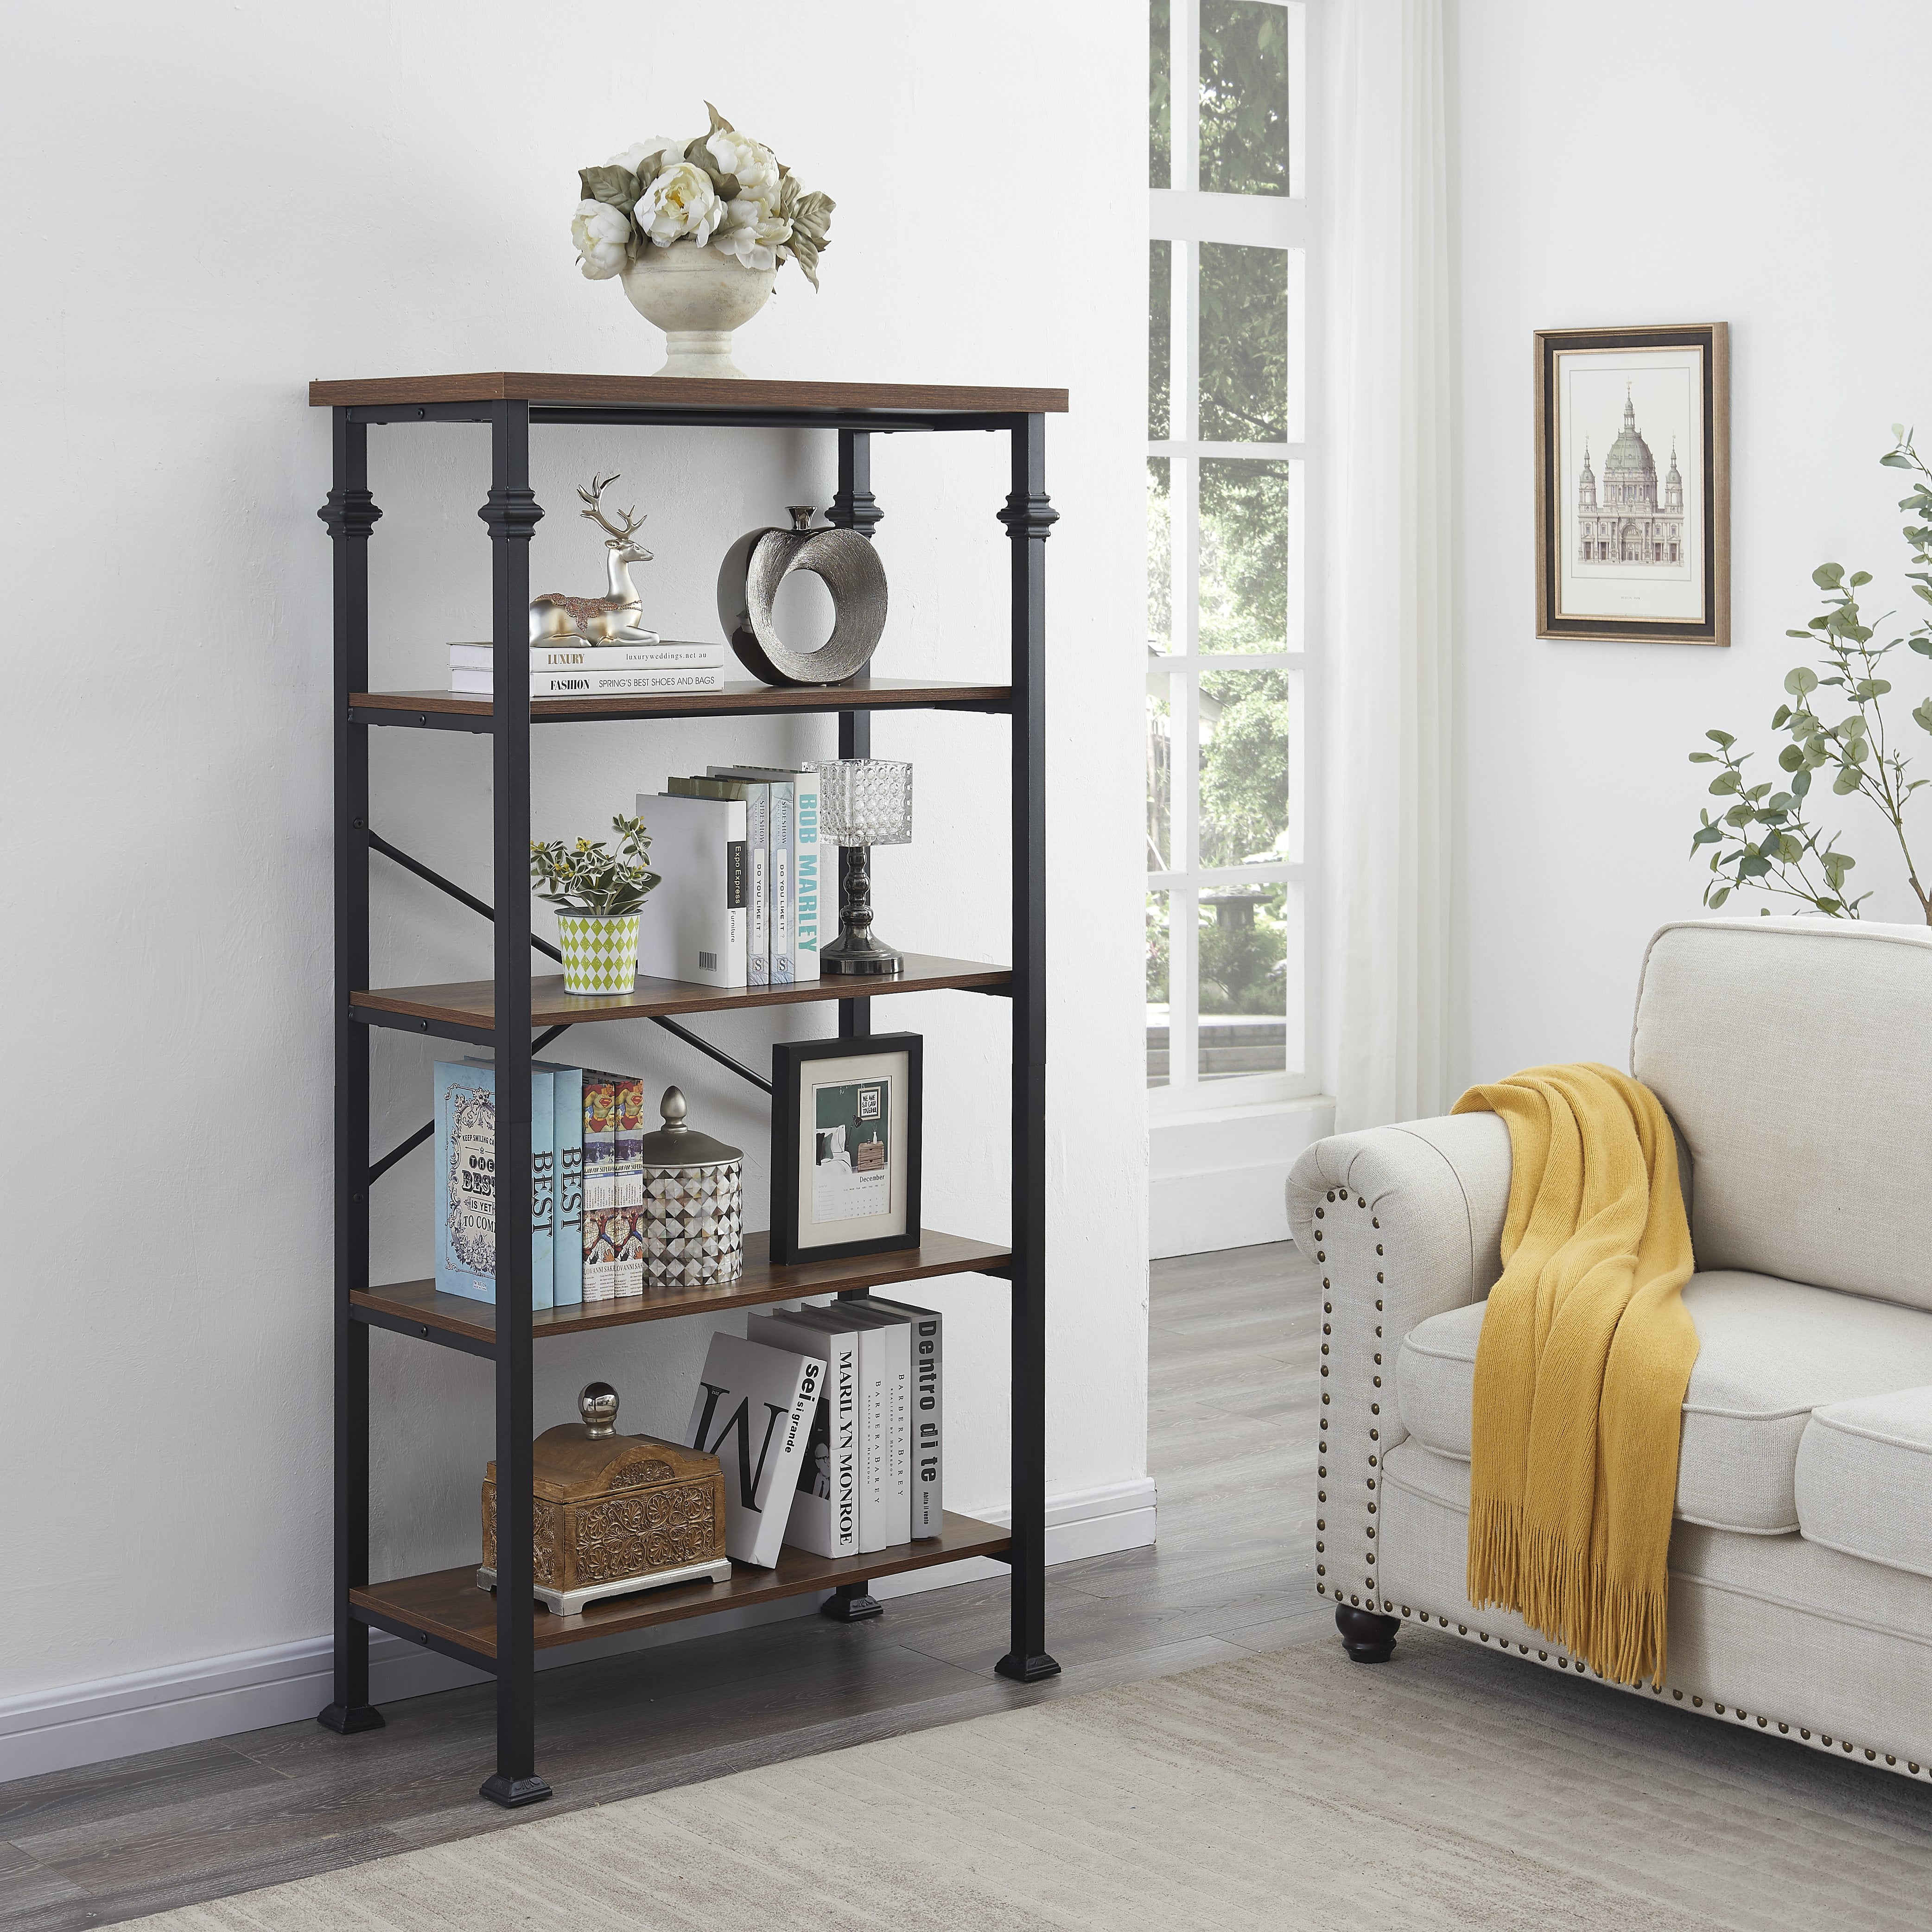 OTK Bookshelf,4 Tier Industrial Book Shelf,Metal Bookcase,Modern Book Shelves for Bedroom,Living Room and Home Office,4-Shelf,Black